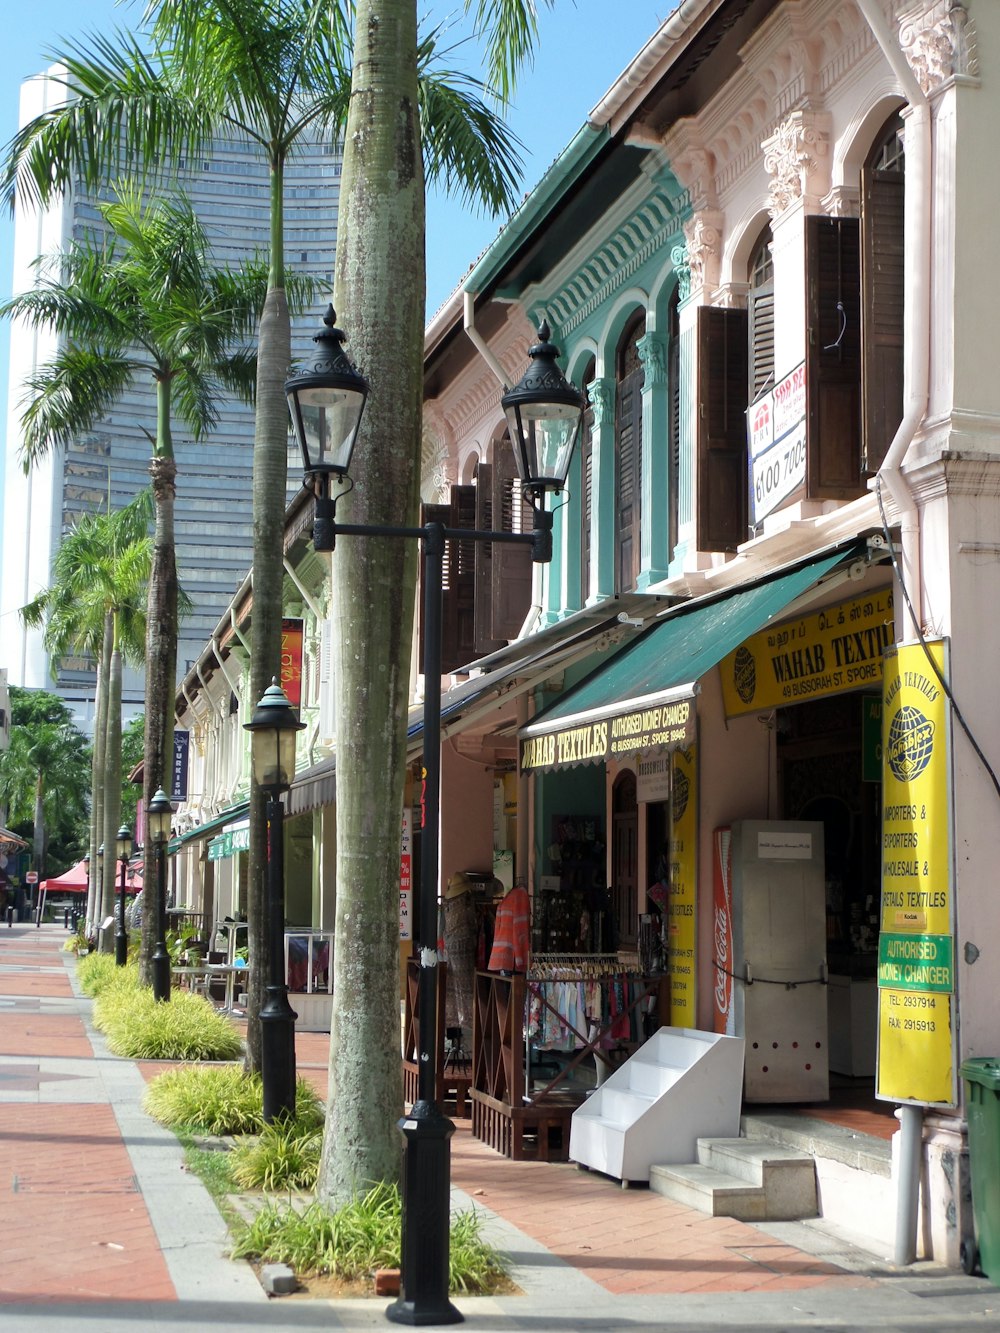 a row of palm trees on a city street